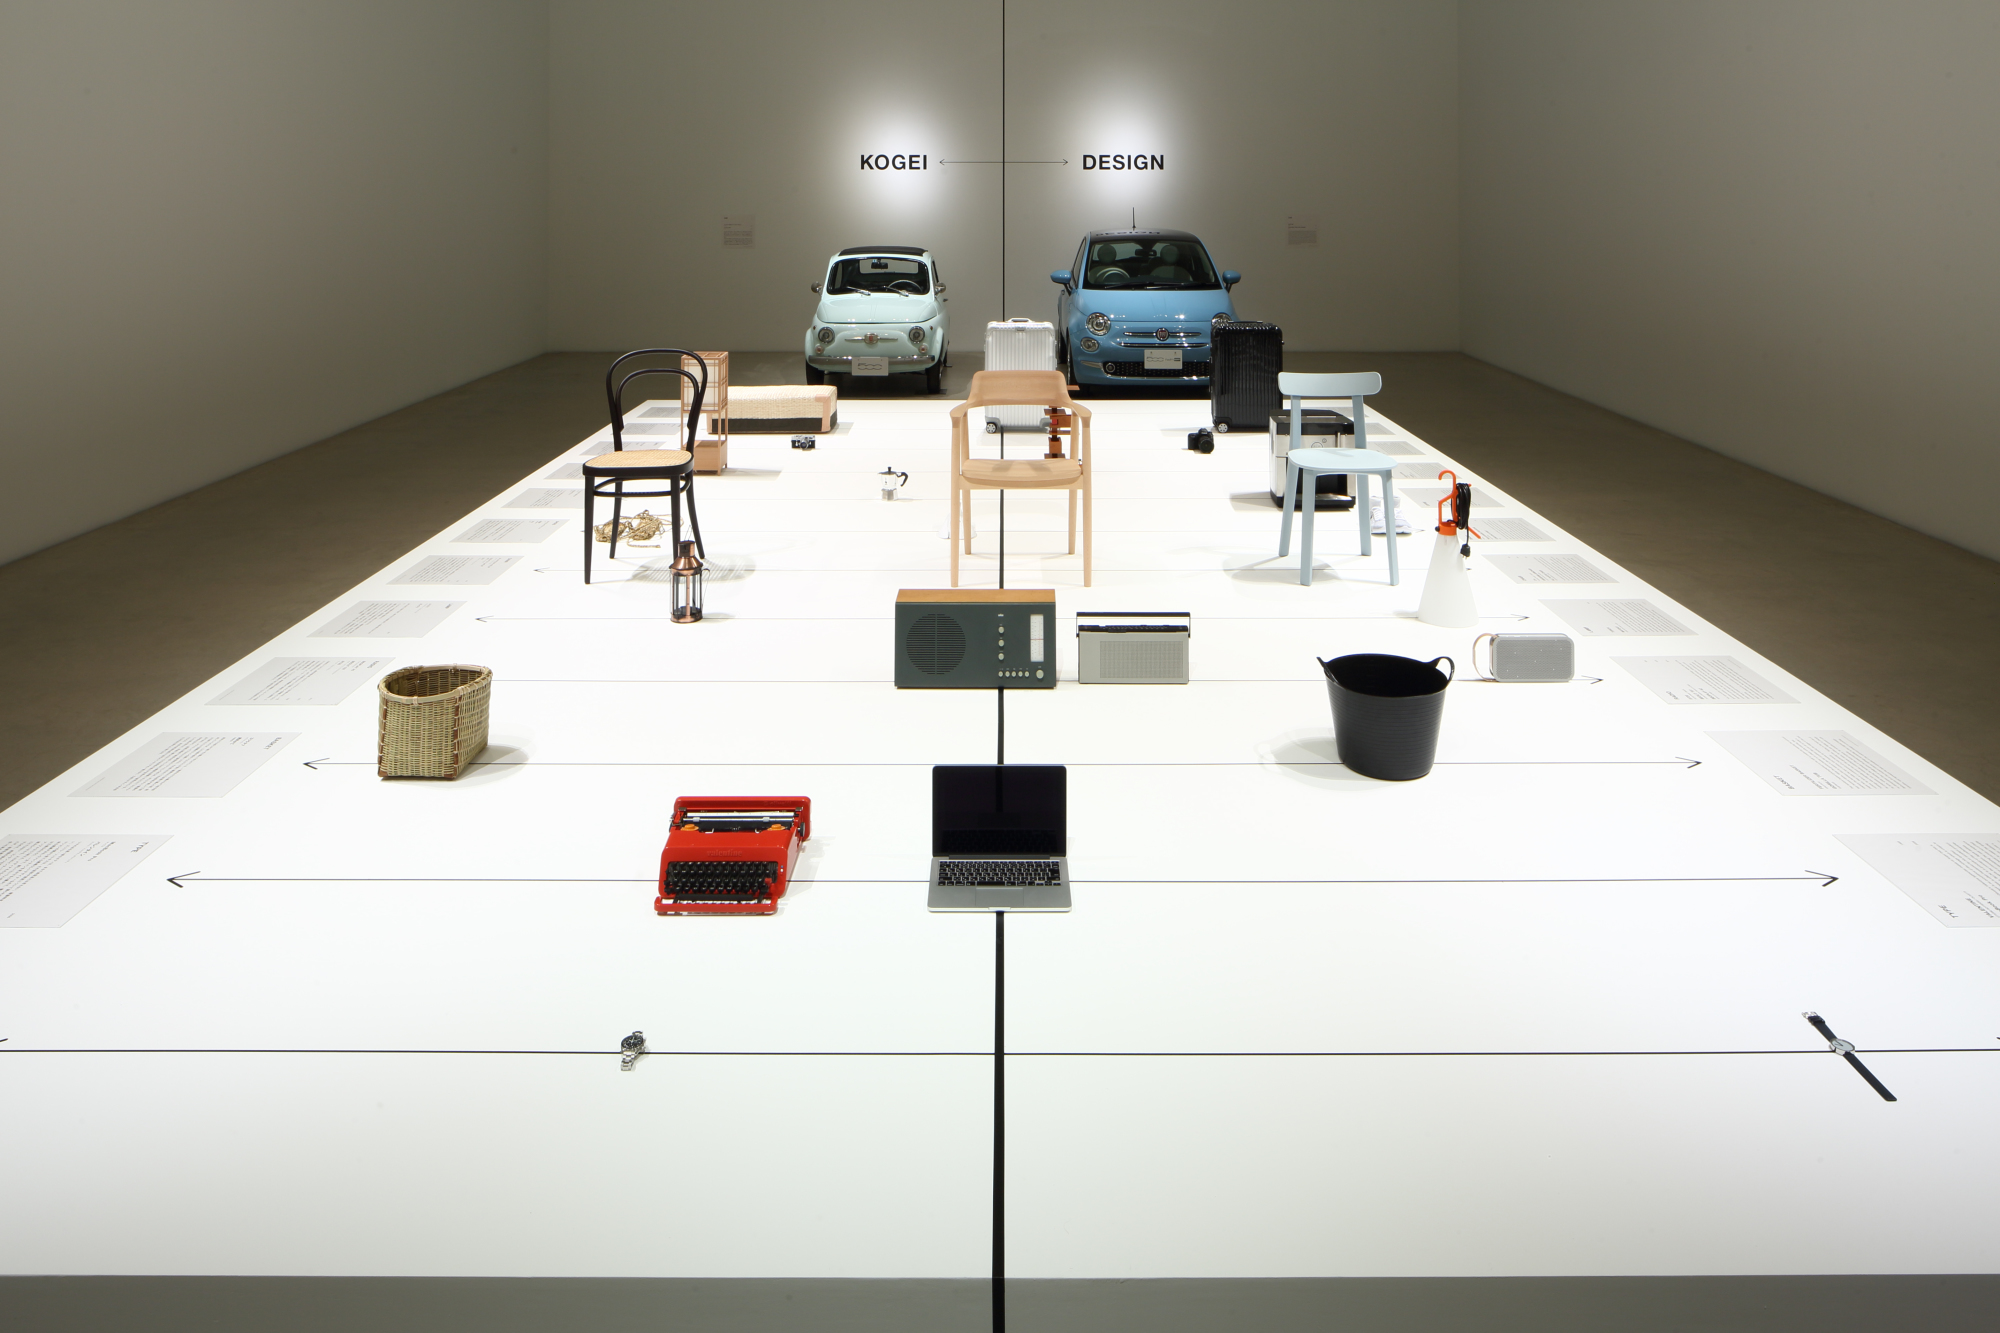 installation view of 'The Boundary between Kogei and Design' at the 21st Century Museum of Contemporary Art, Kanazawa | KIOKU KEIZOU, COURTESY OF 21ST CENTURY MUSEUM OF CONTEMPORARY ART, KANAZAWA